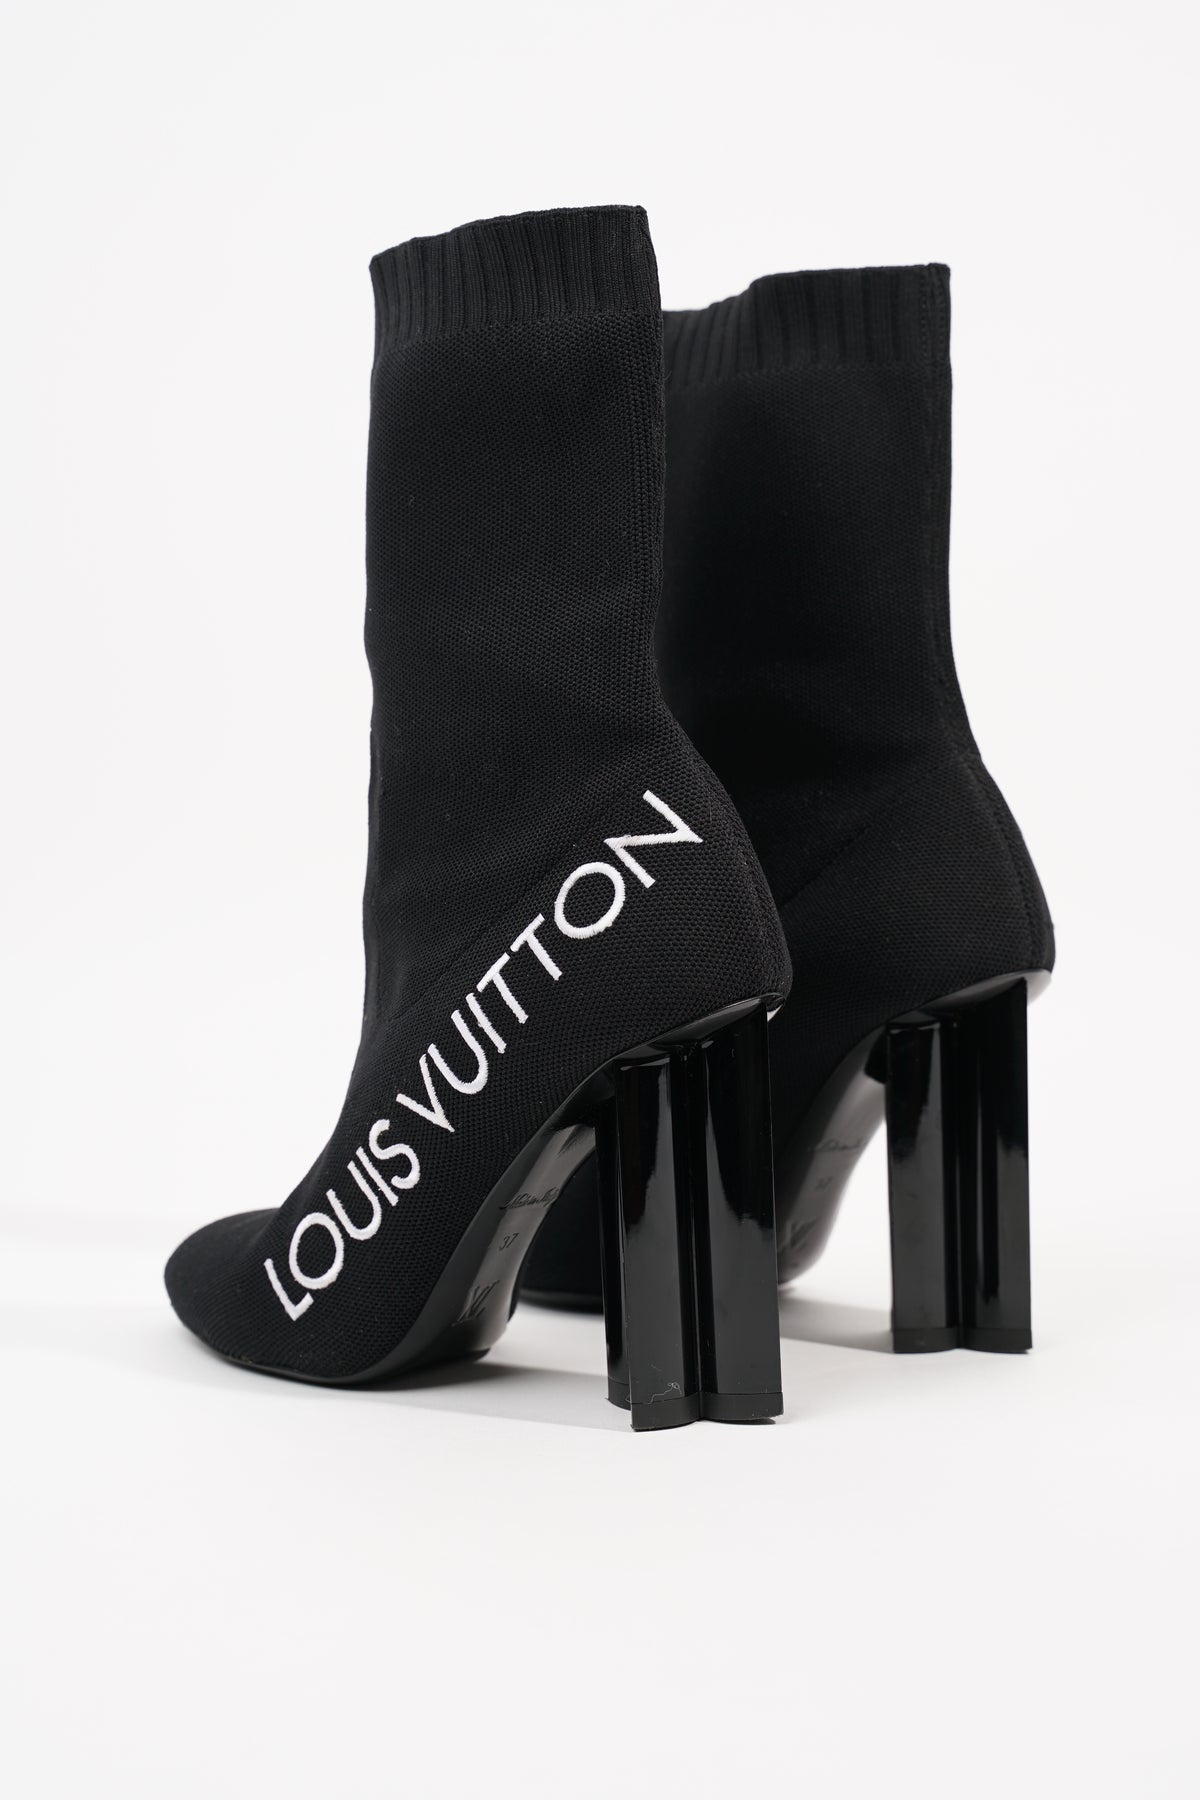 Designer Low Women's boots LV #47 - 9.0